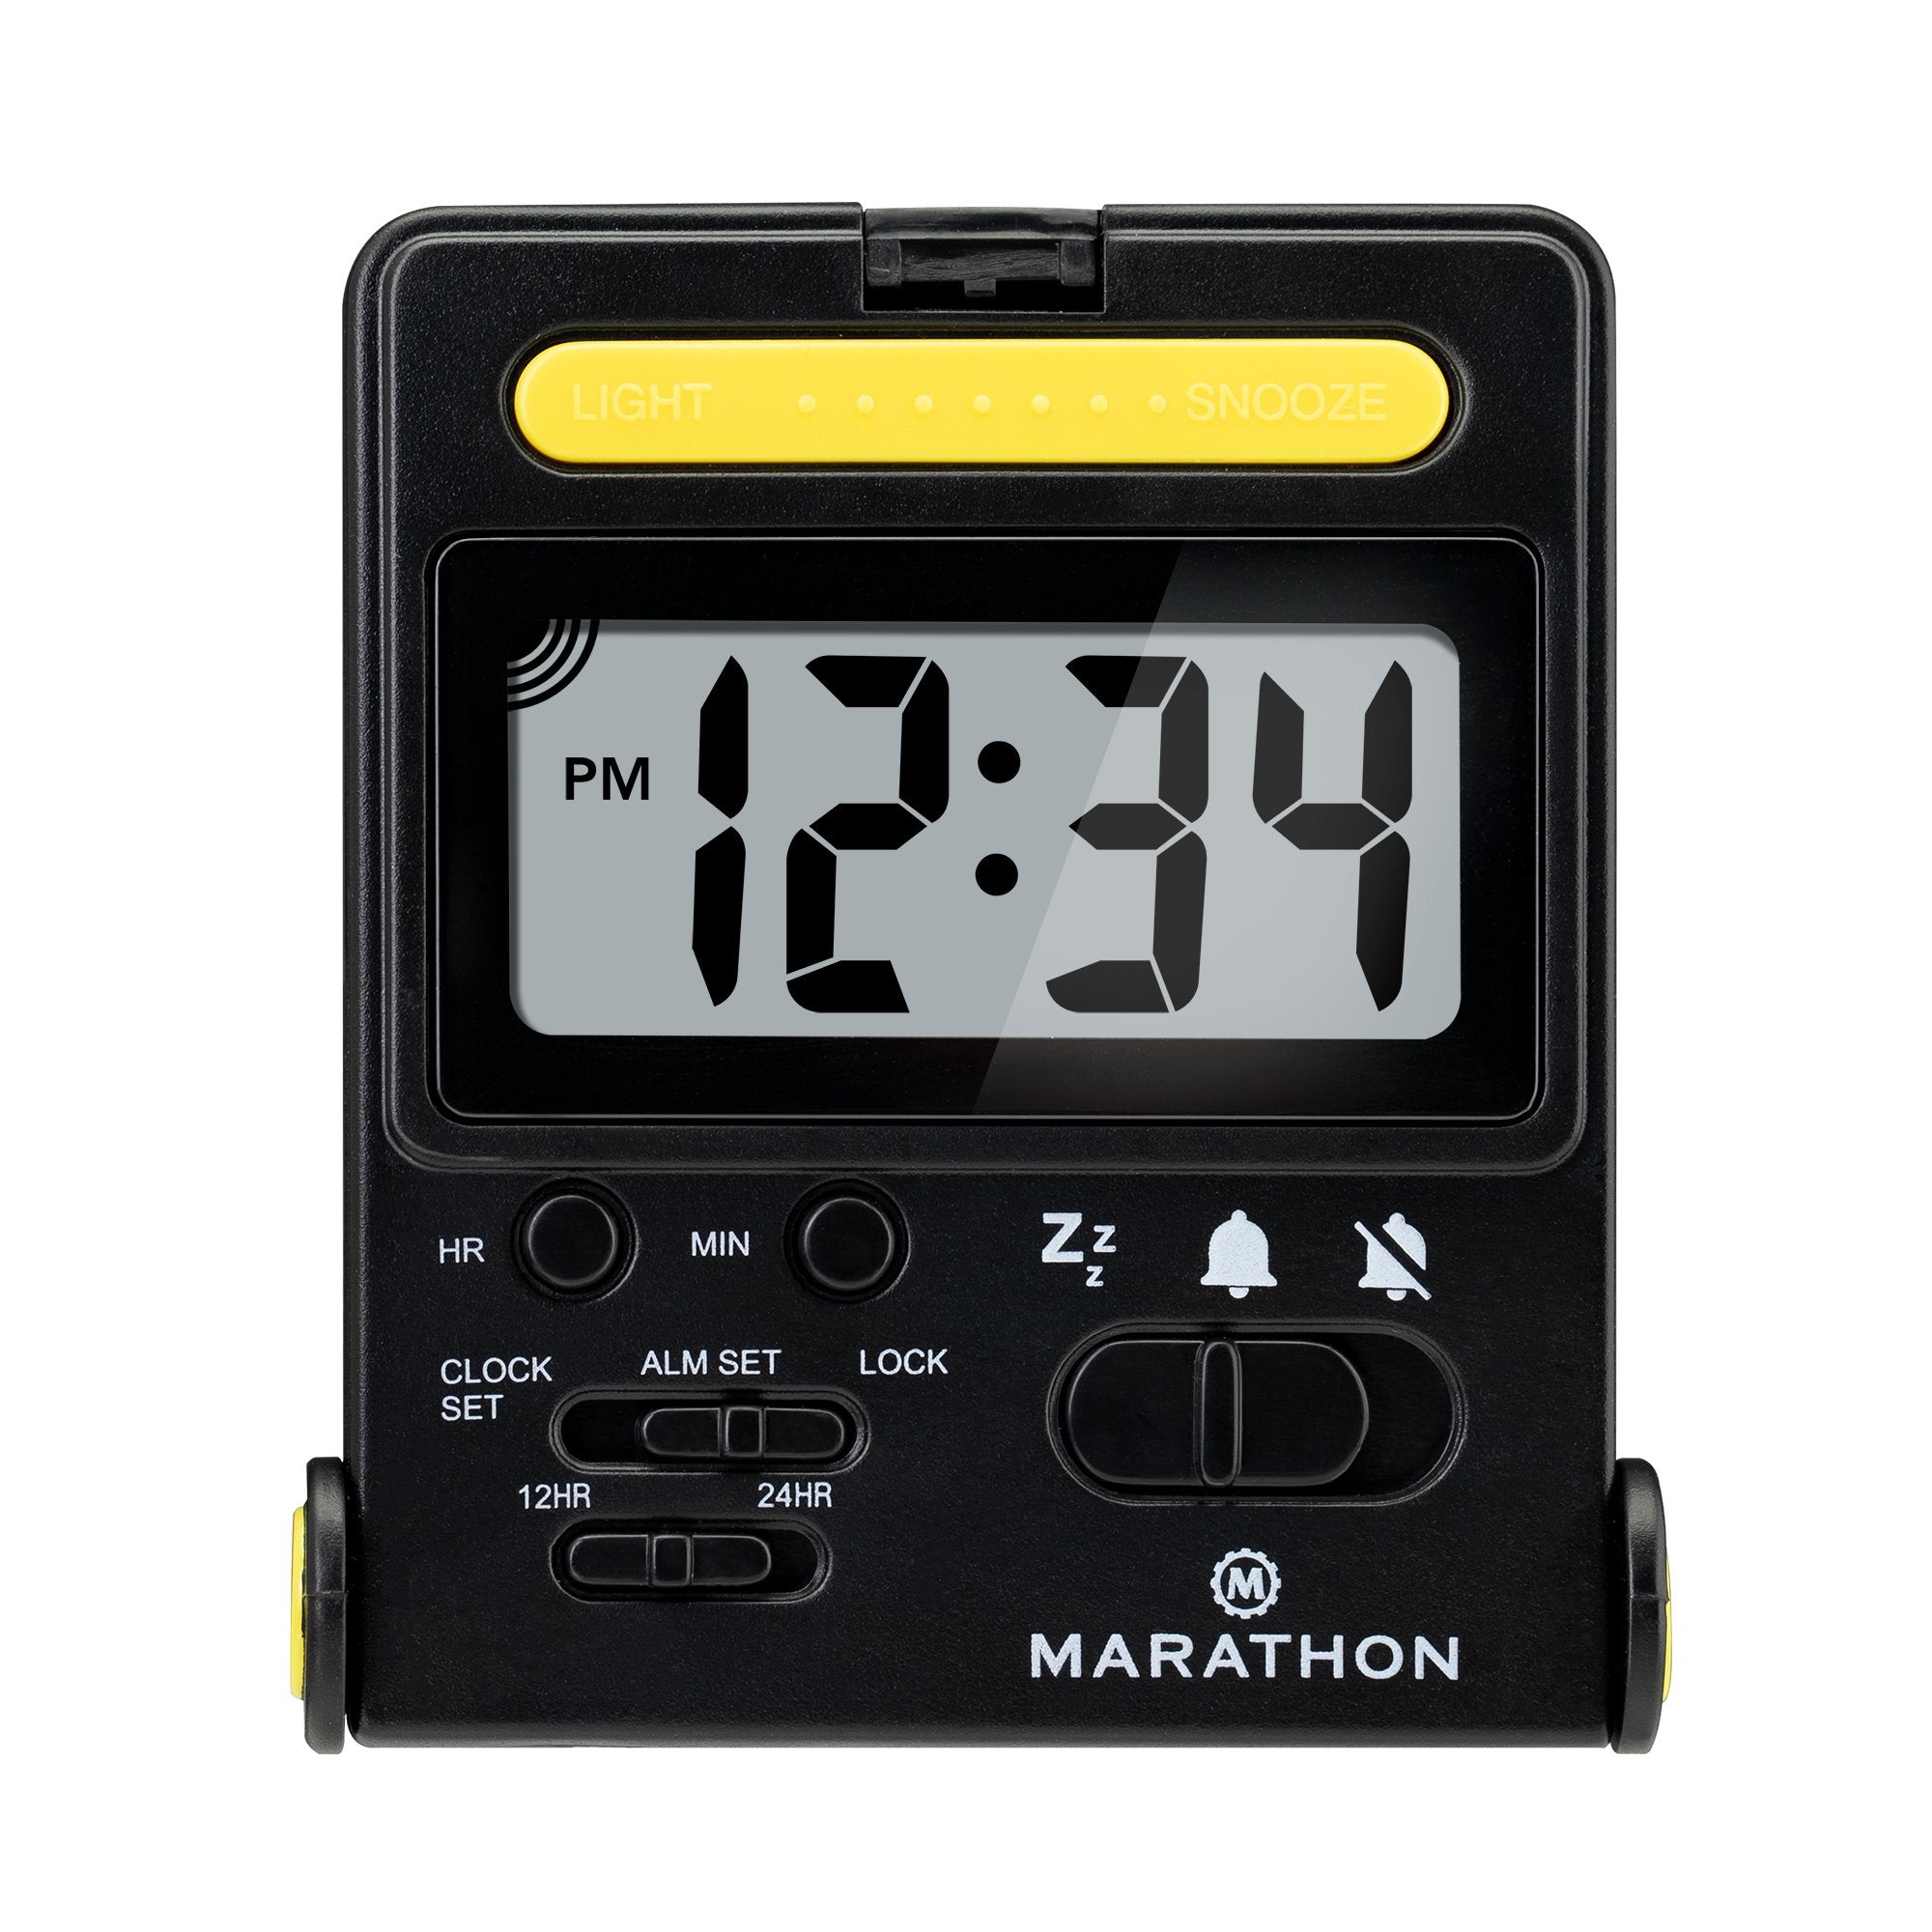 Foldable Compact Travel Alarm Clock with Locking Mechanism - marathonwatch